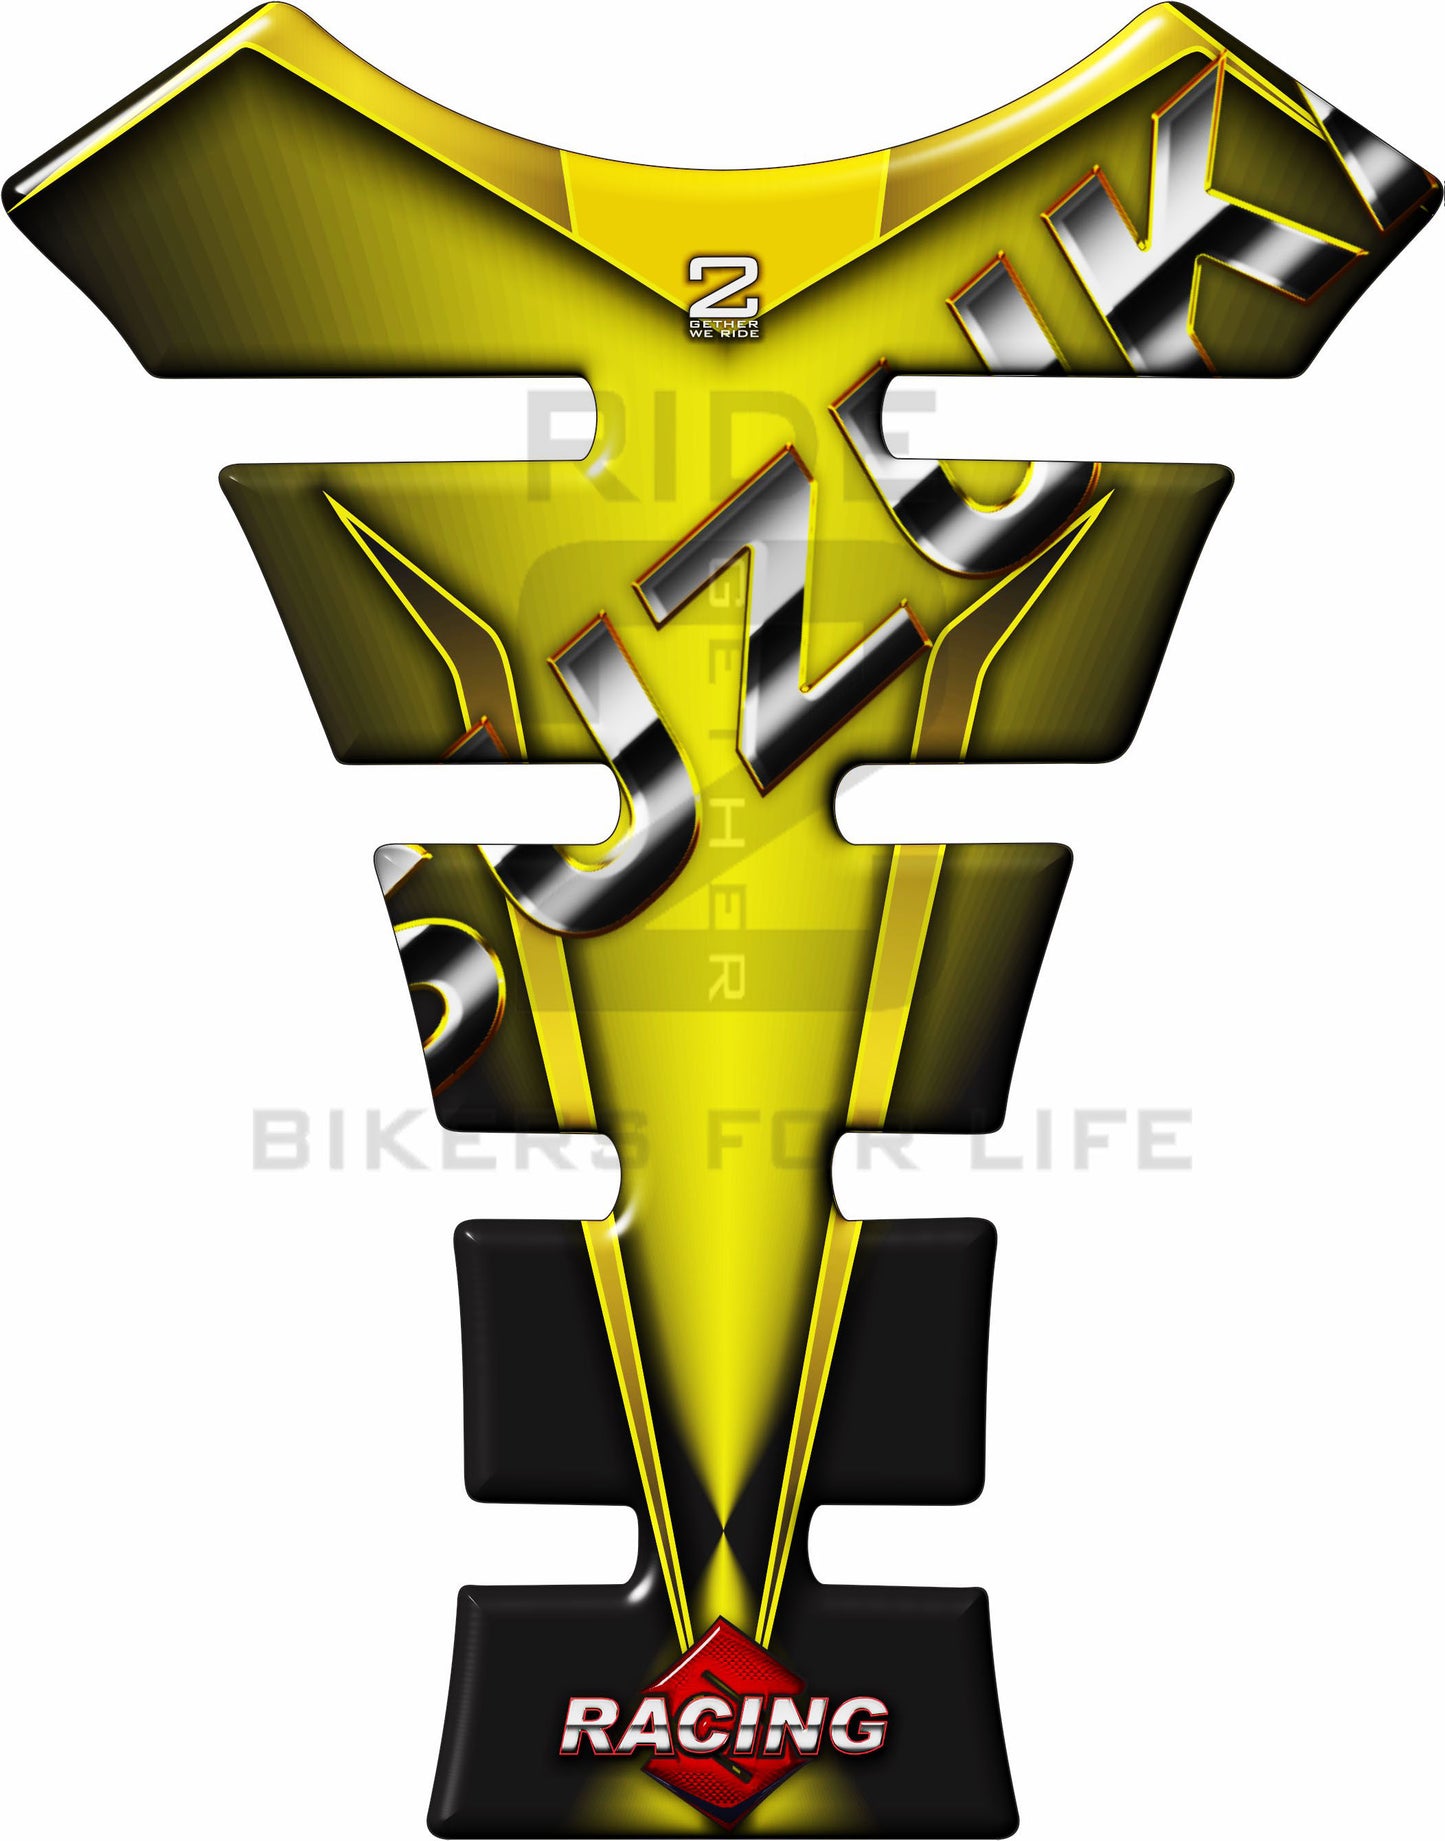 Suzuki Yellow, Black and Chrome Motor Bike Tank Pad Protector. Fits 1990 - 2023 models.